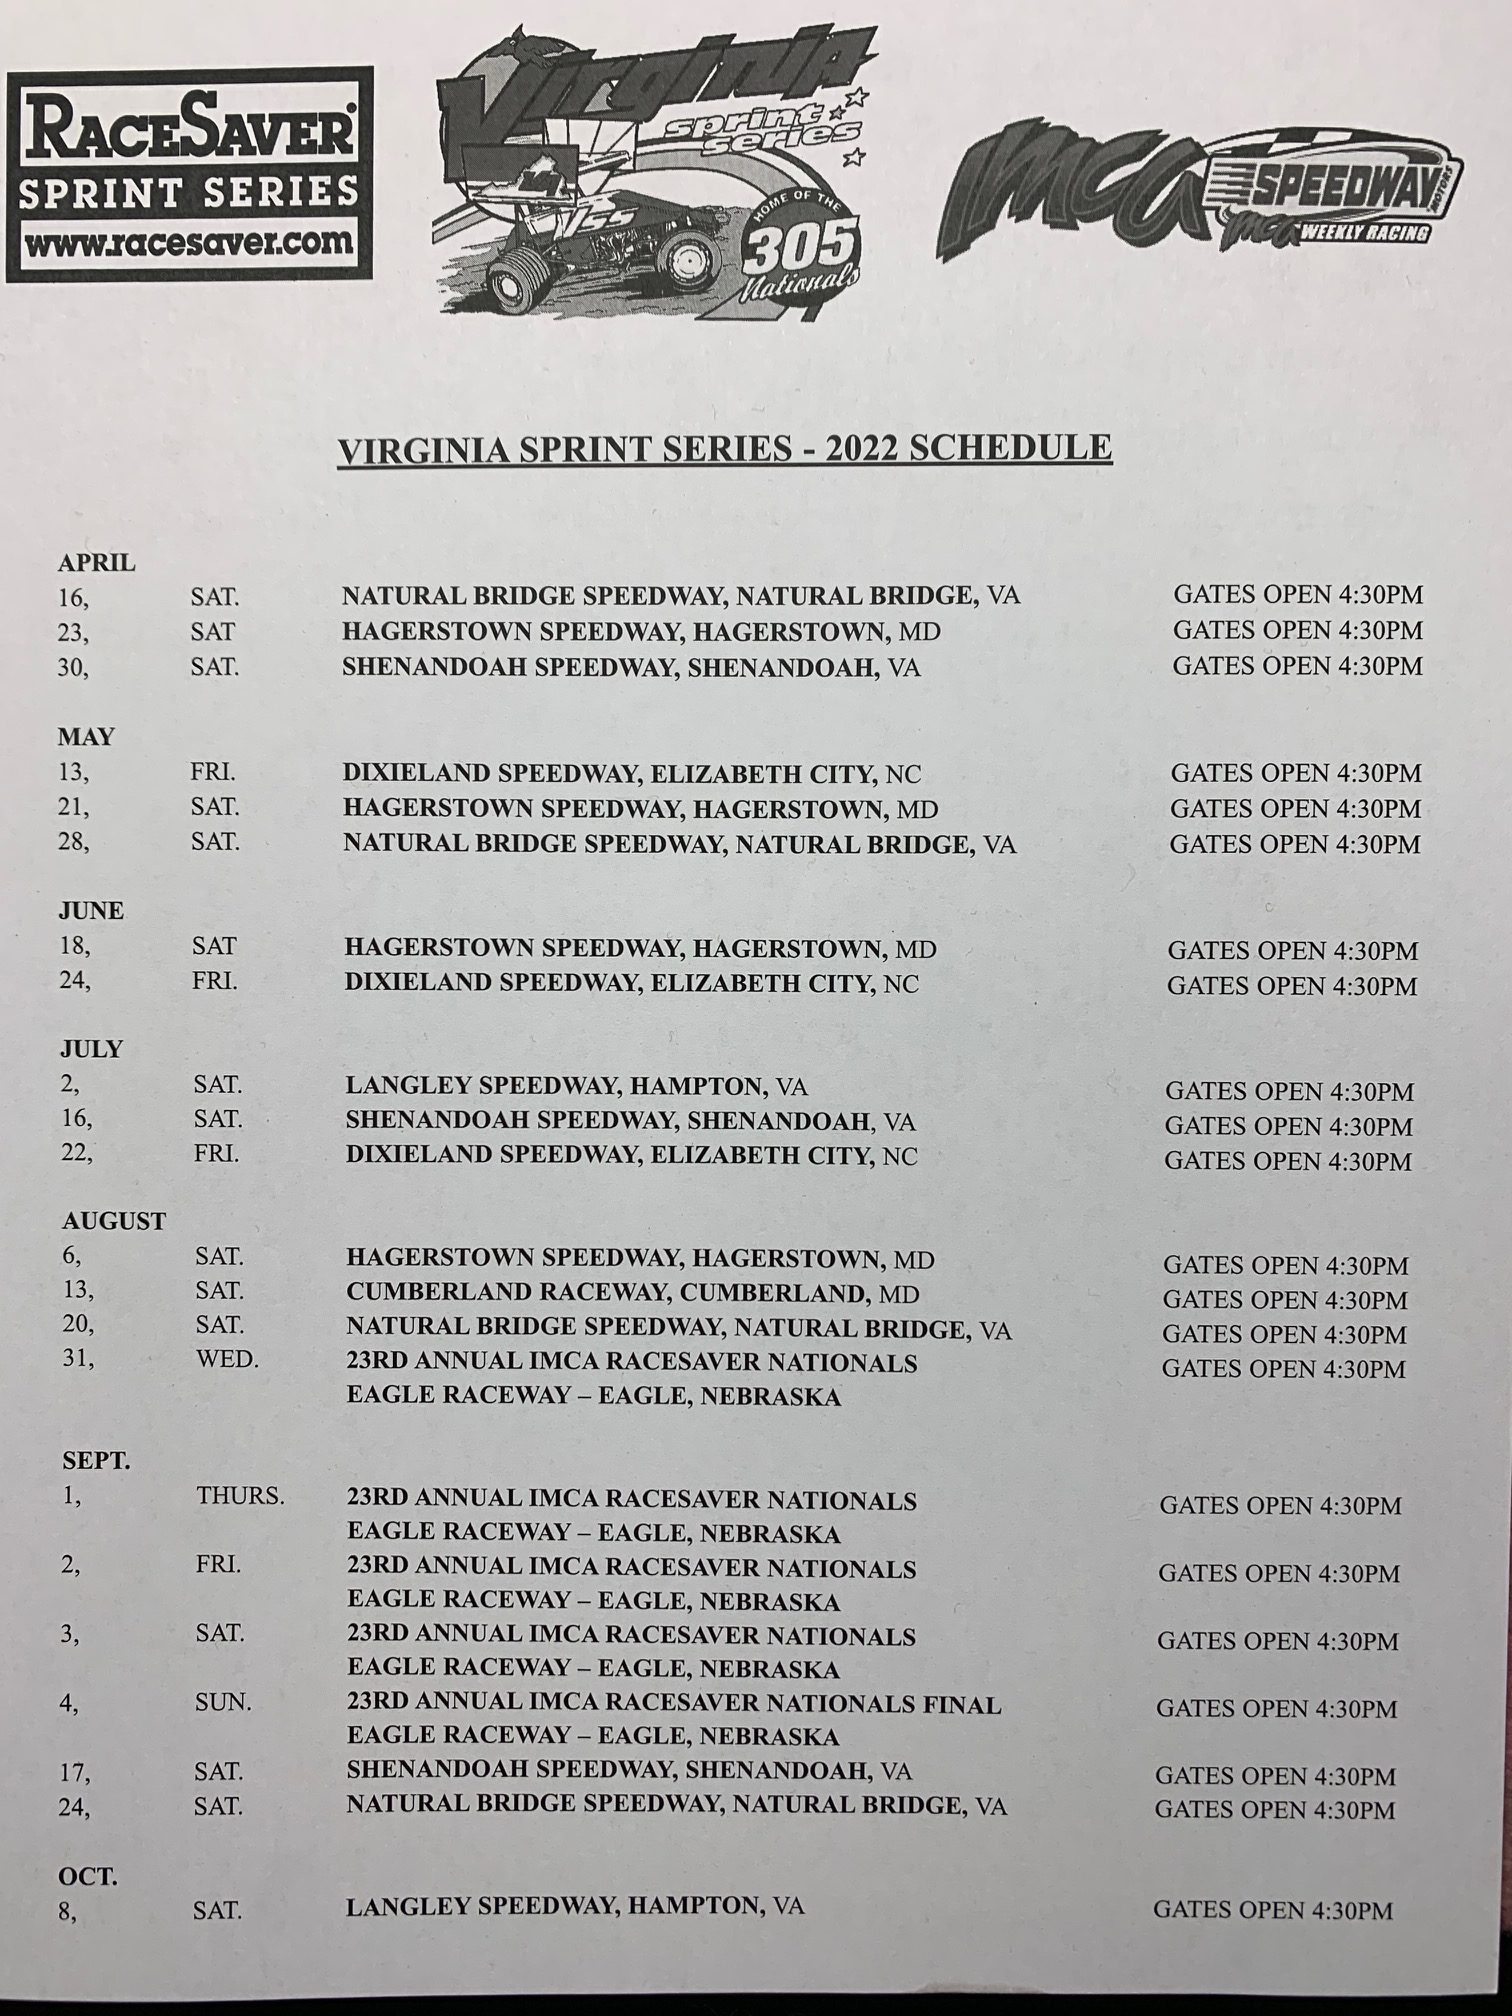 Virginia Sprint Series (VSS) 2022 Schedule